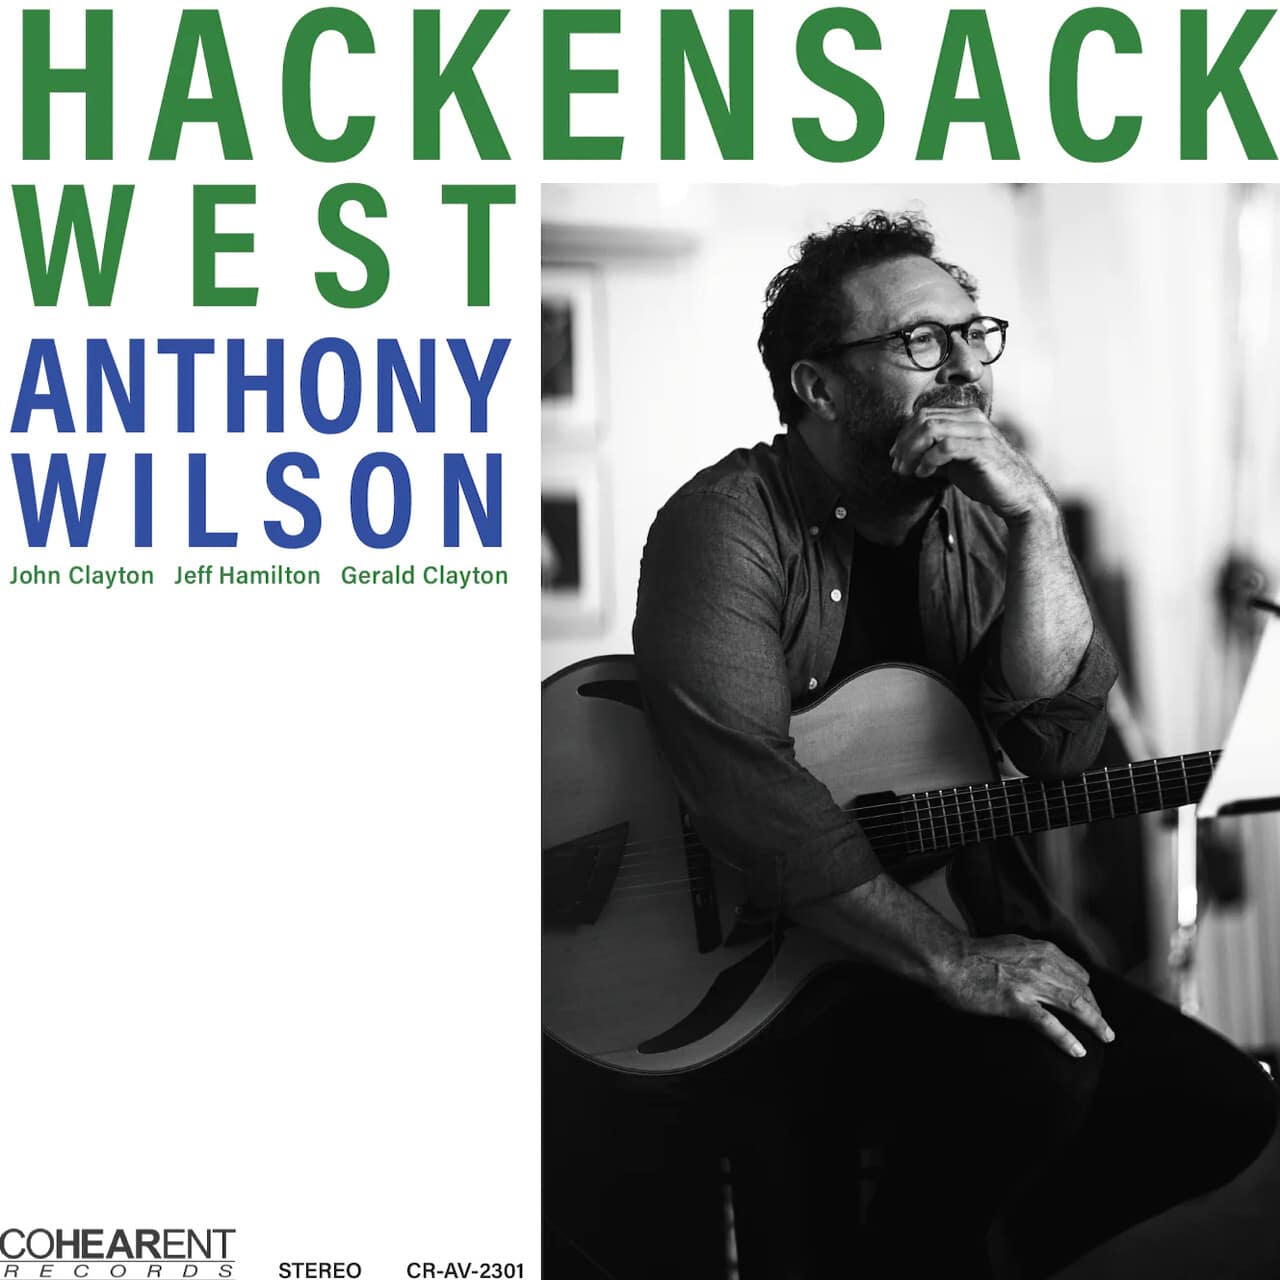 Anthony Wilson - Hackensack West